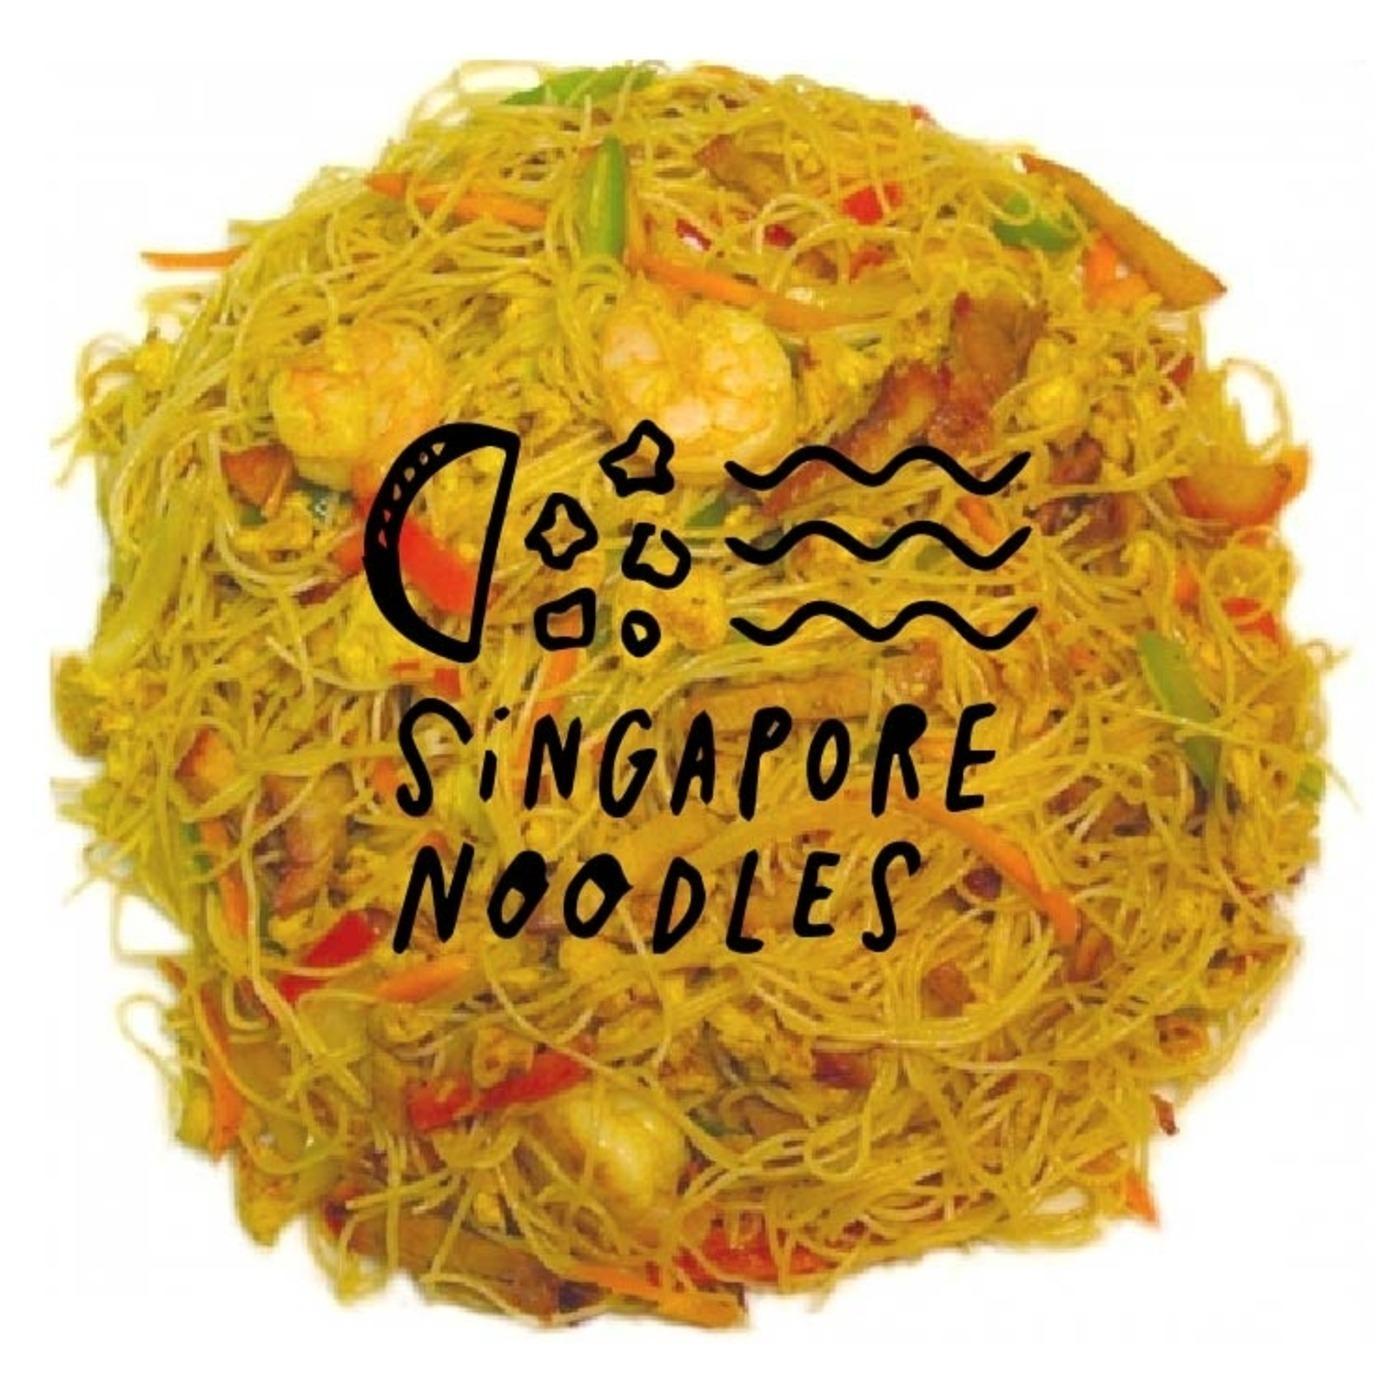 The Singapore Noodles Podcast